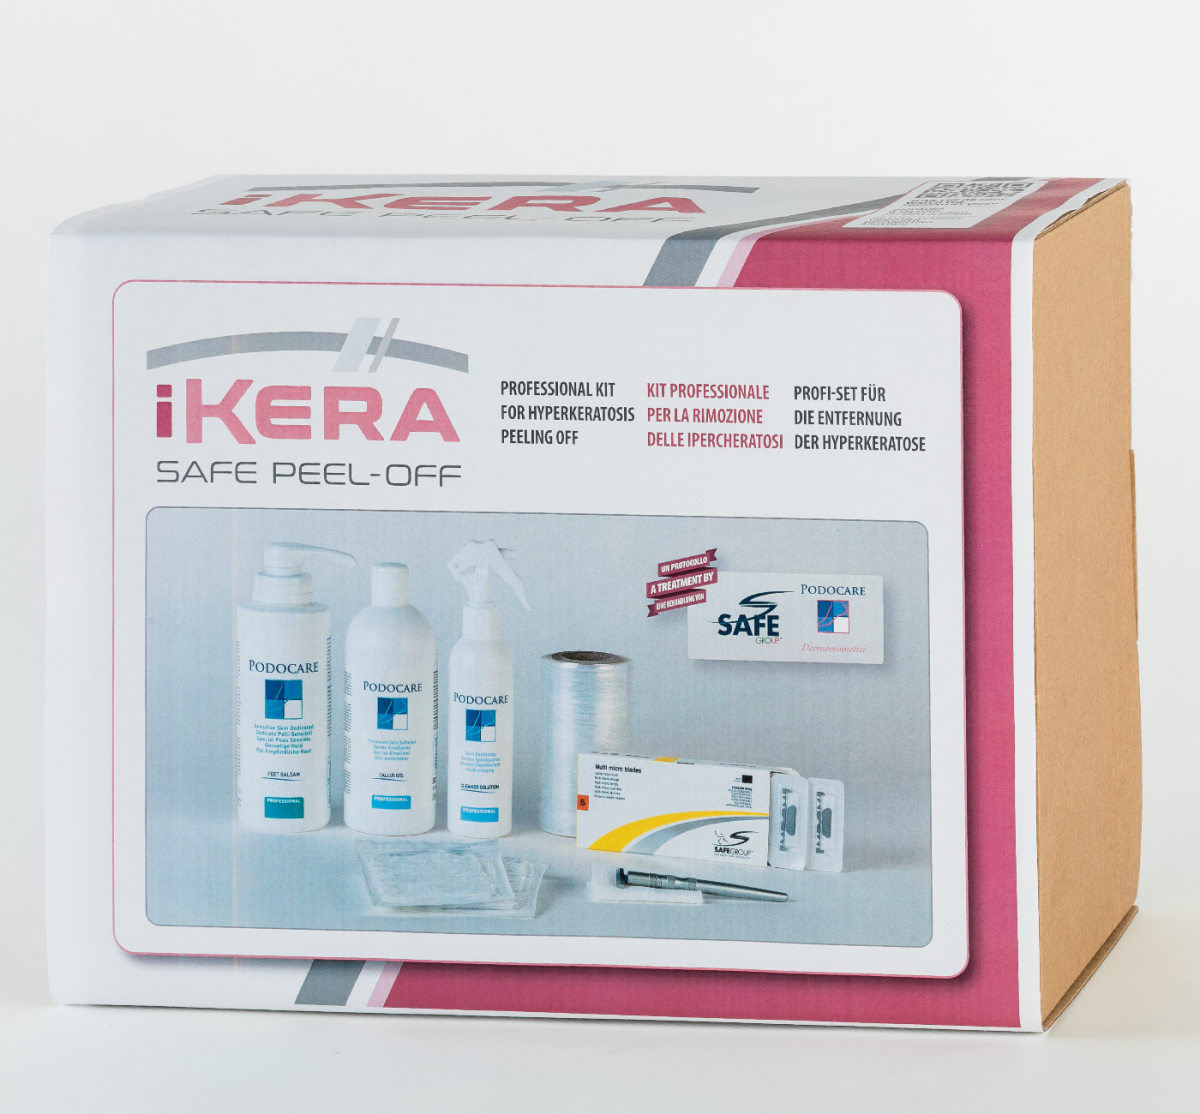 iKera Safe Peel-Off Professional Kit - Podocare